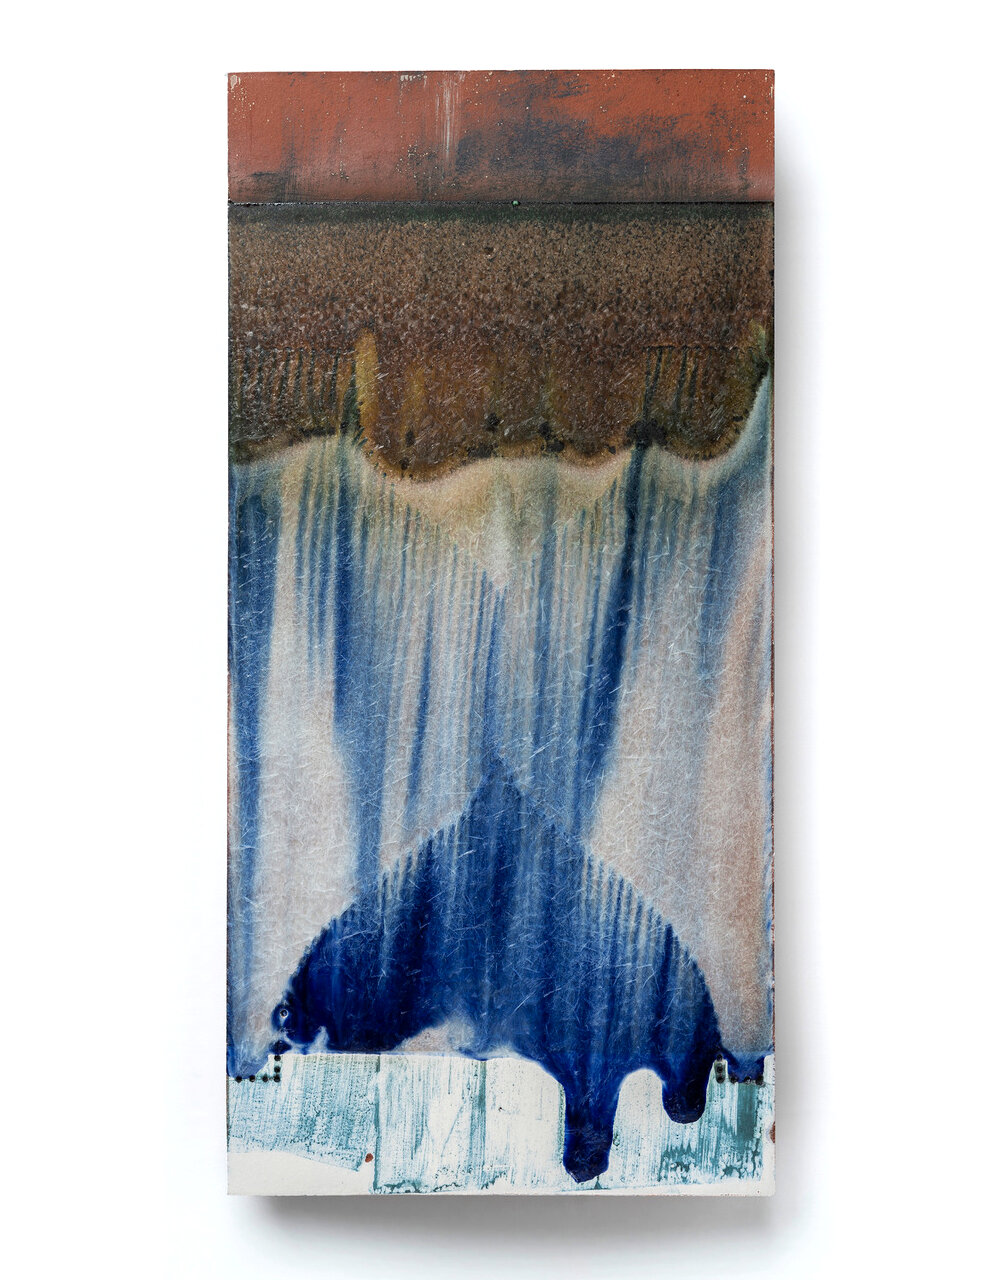  Veil (15-9-1), 2015, glazed earthenware, 16 1/2" x 8" x 1/4", Photo: E.G. Schempf 